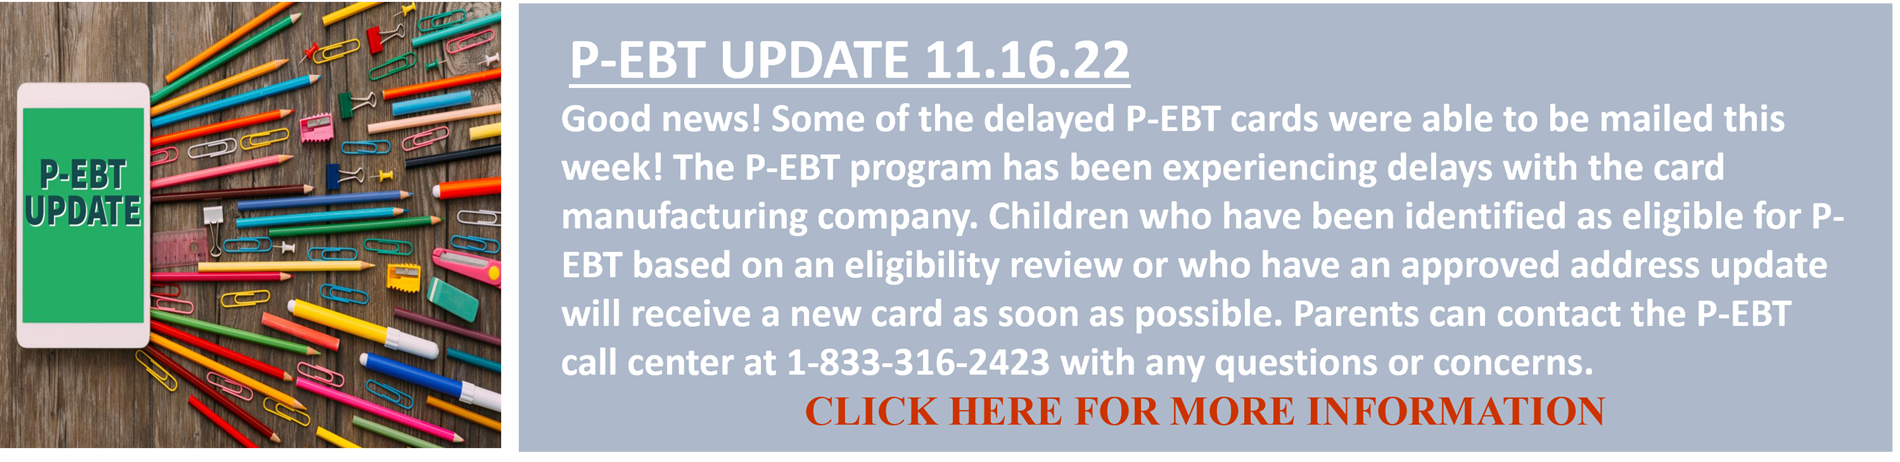 pebt update 11.16.22